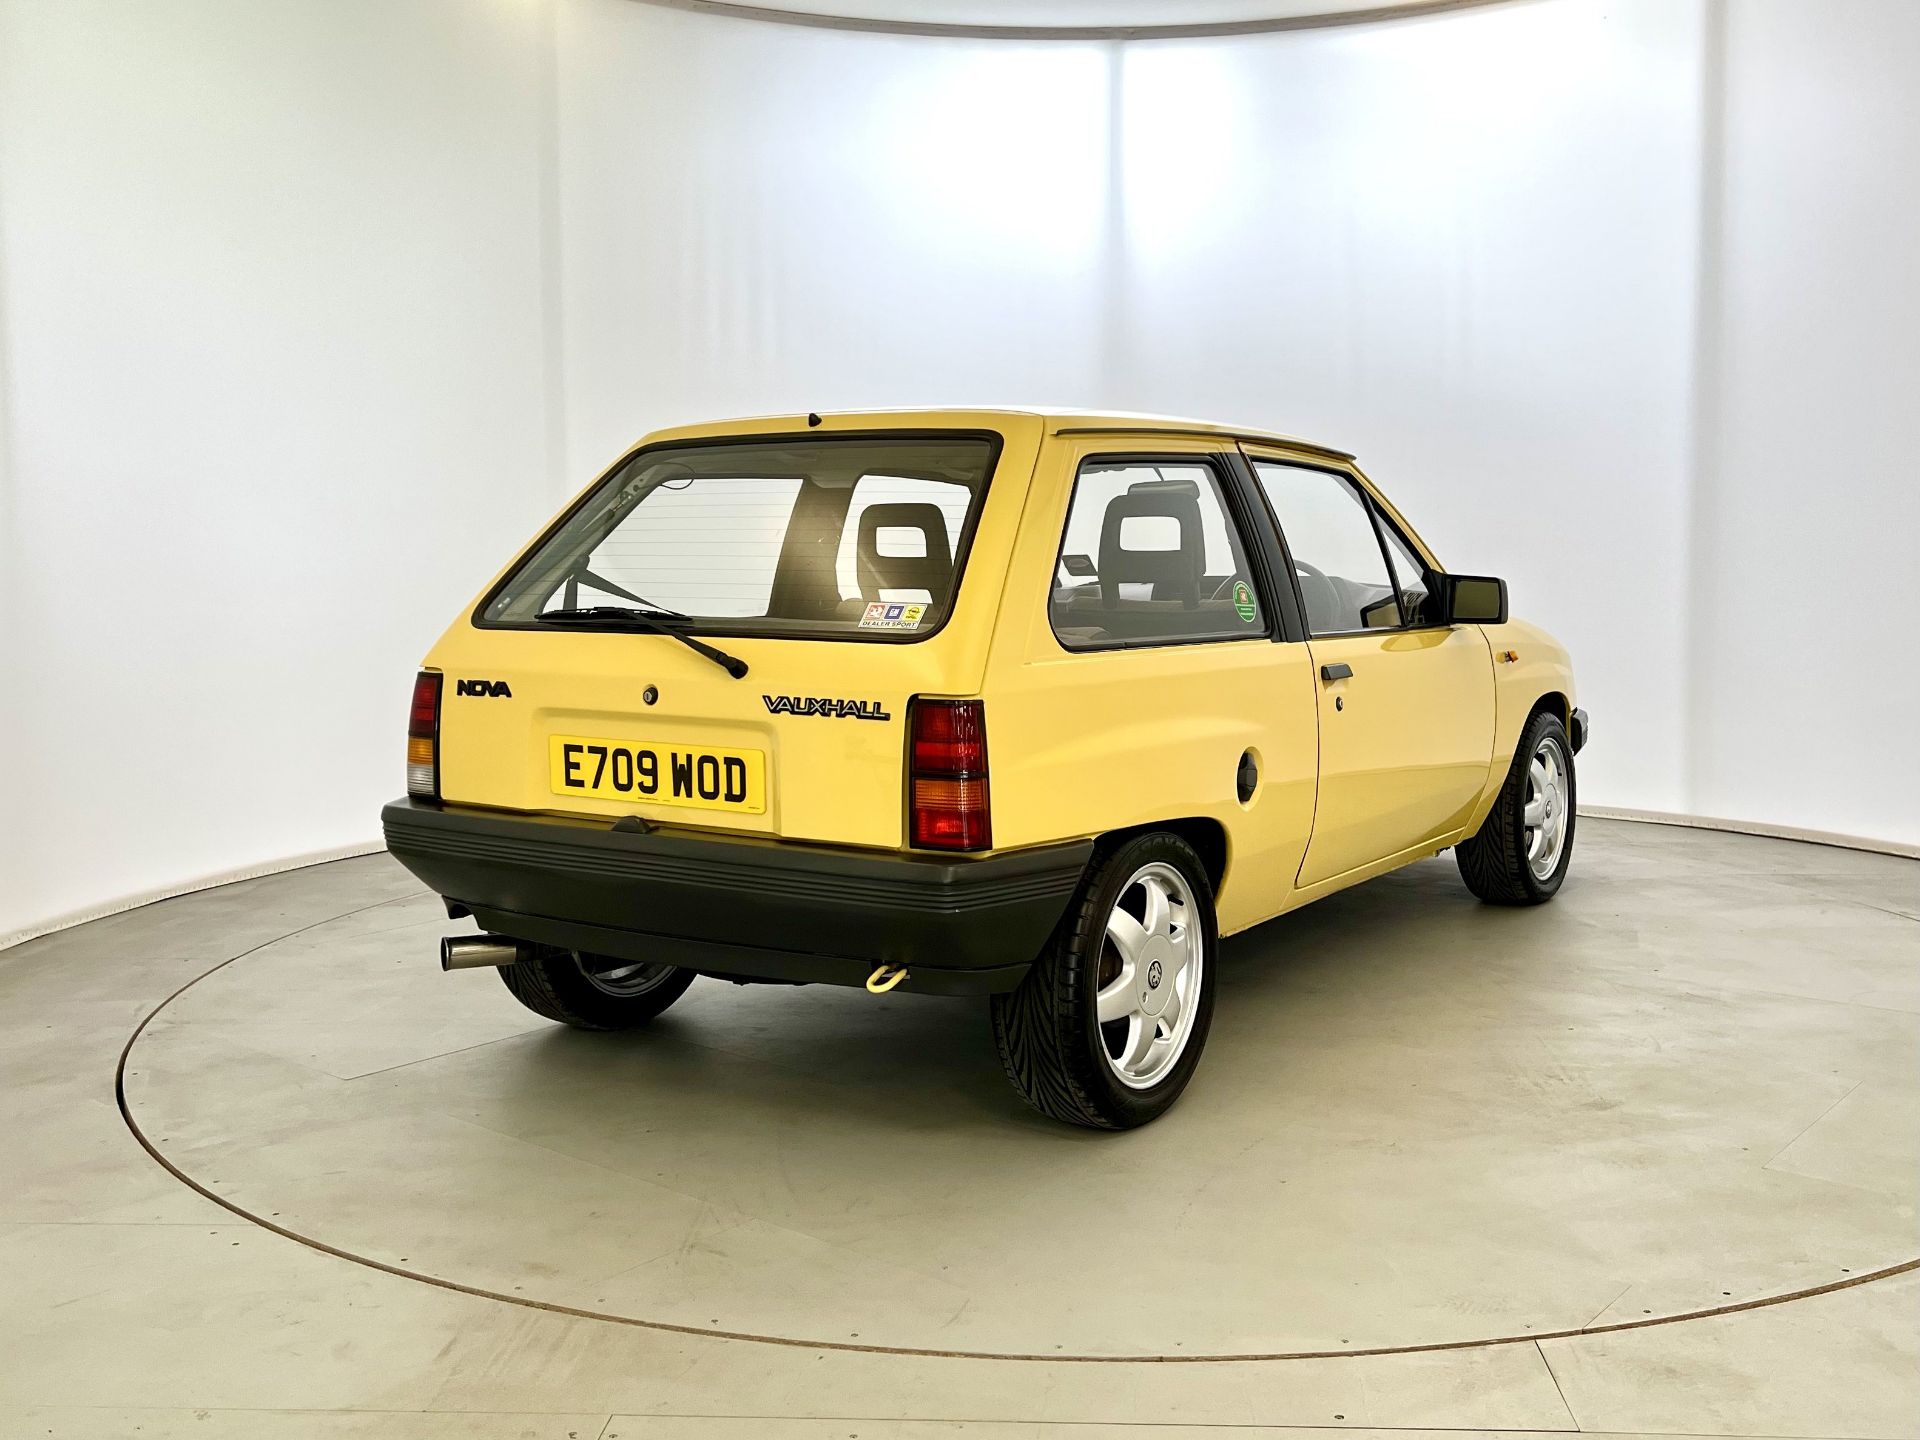 Vauxhall Nova - Image 9 of 33